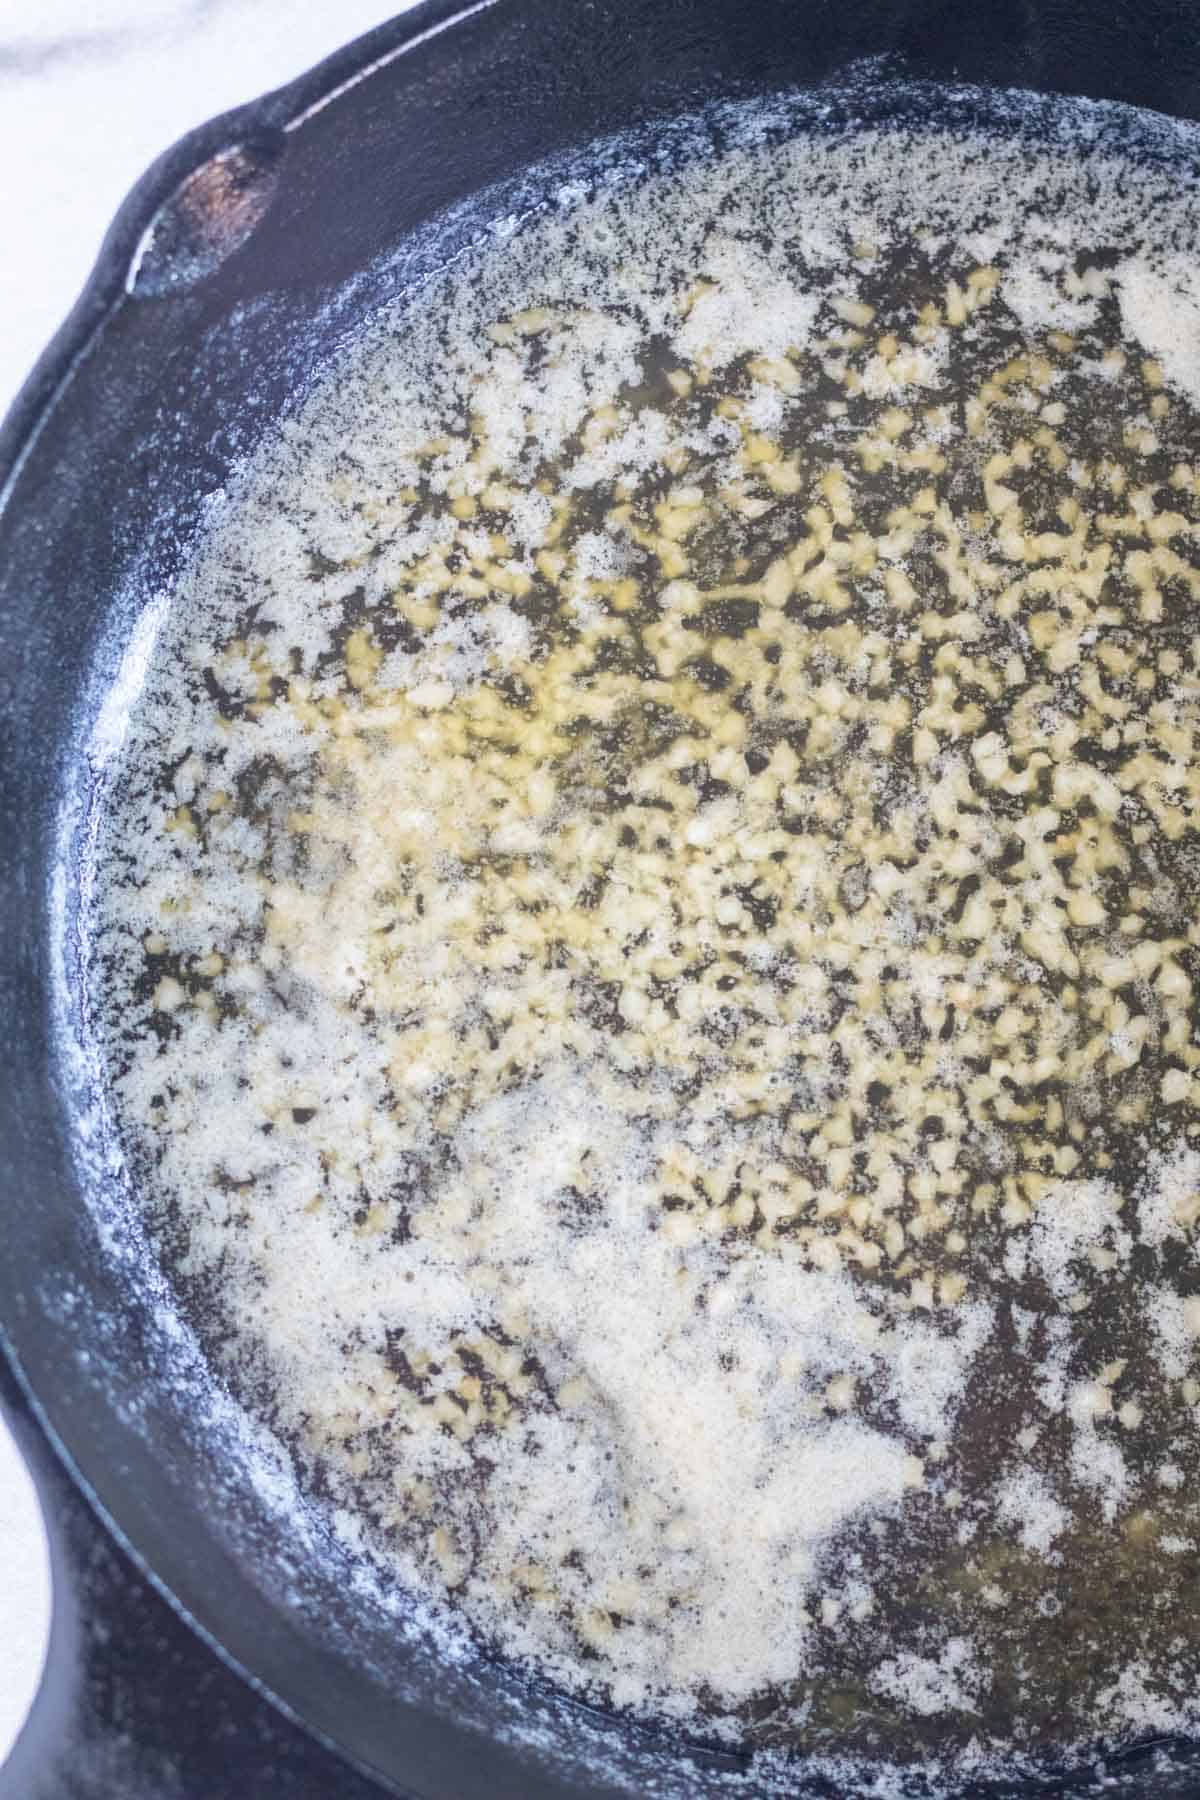 garlic sauteing in butter